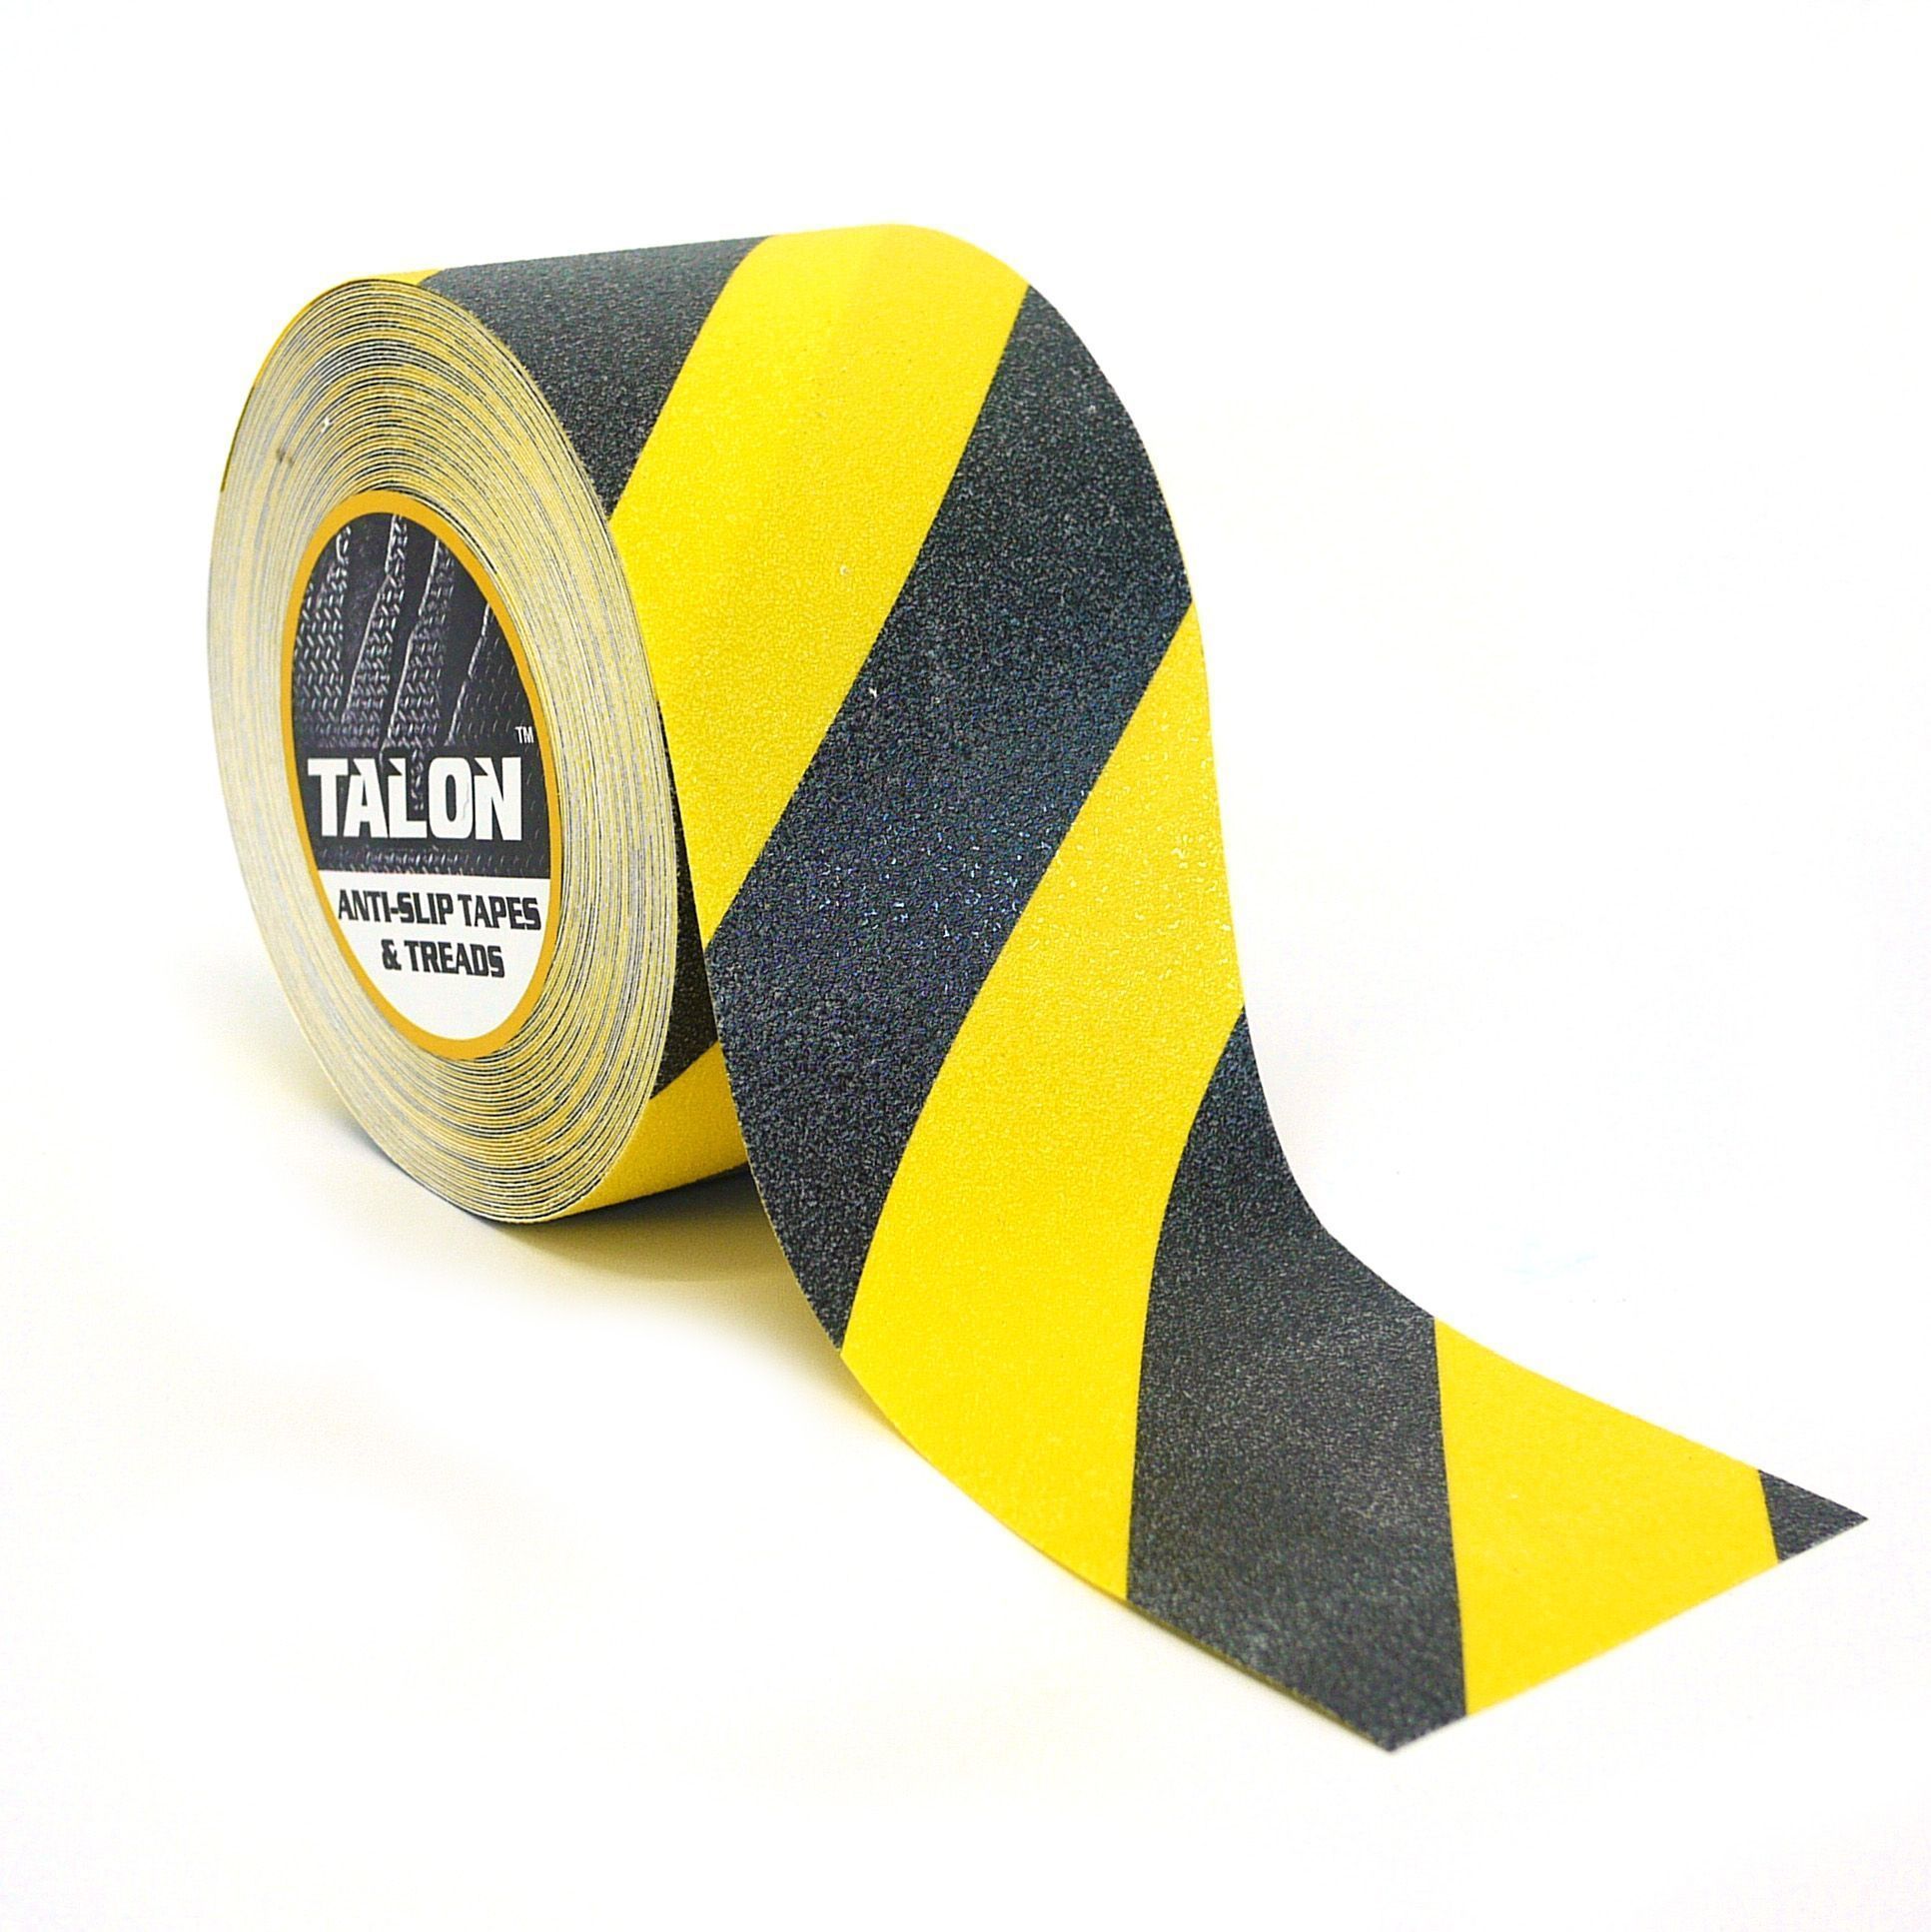 Talon Extra Coarse Anti-Slip / Grip Tape in 4 widths